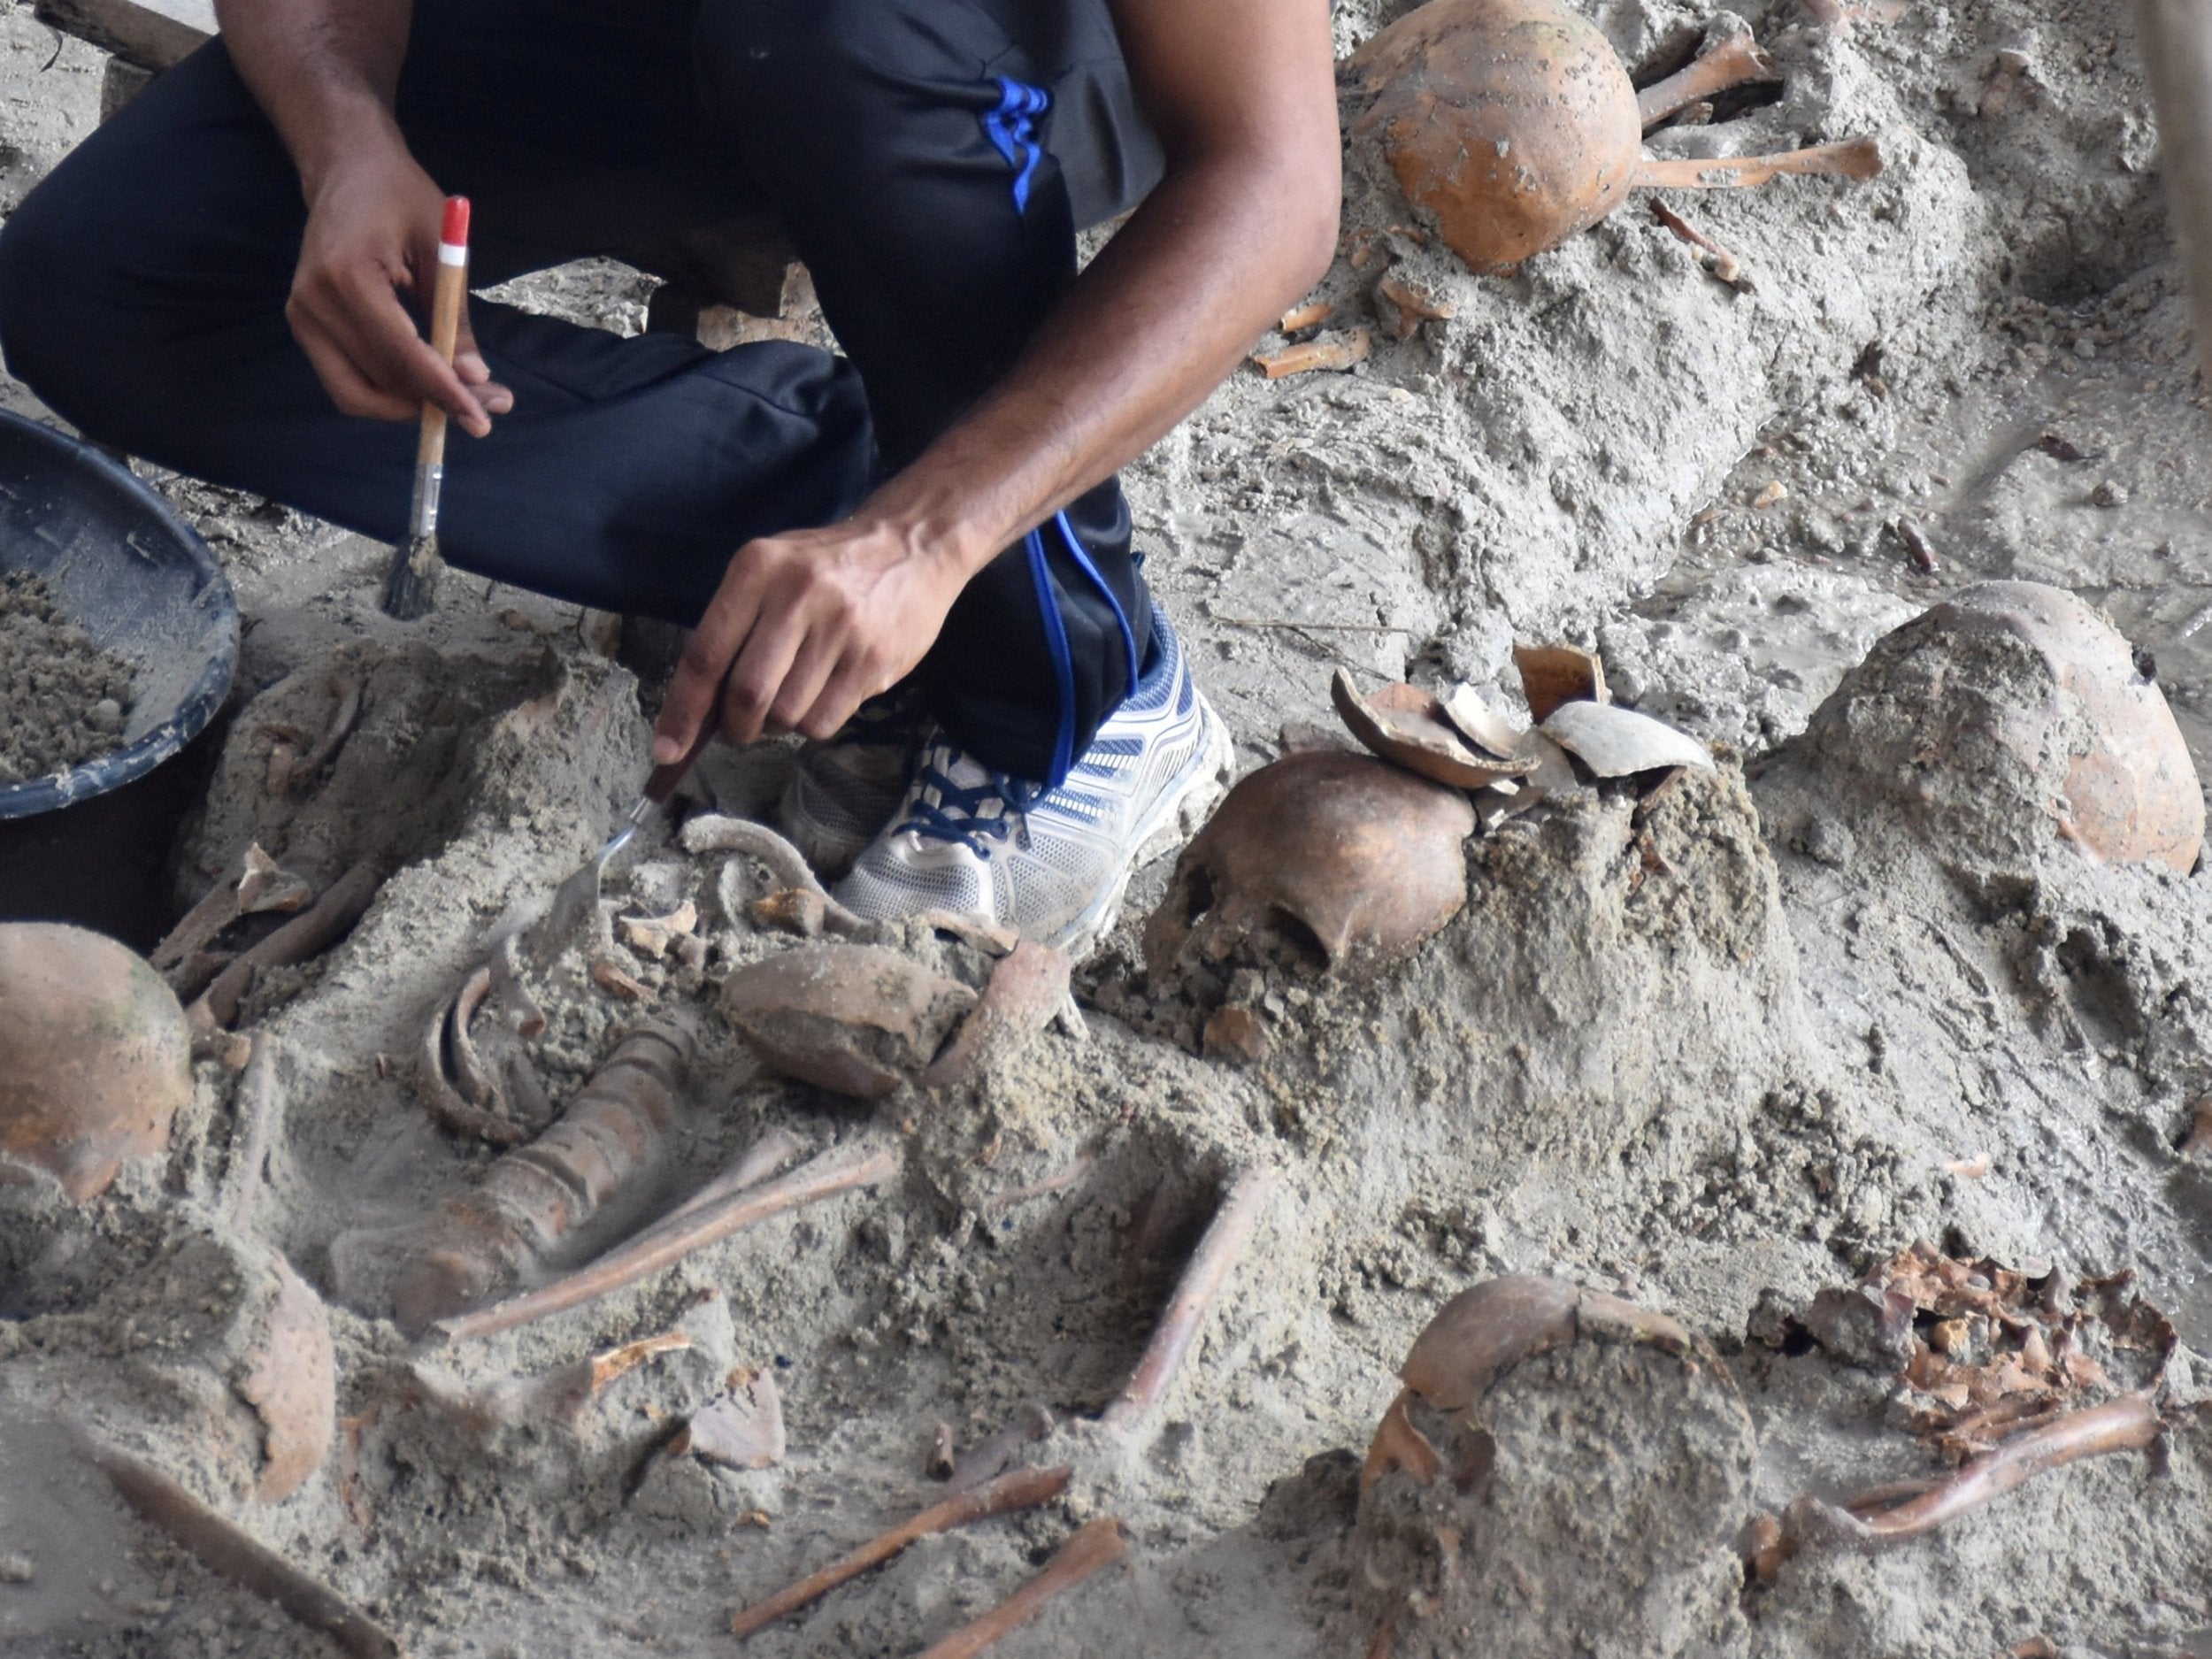 Staff dig up skeletons at a site of a former war zone in Mannar, Sri Lanka